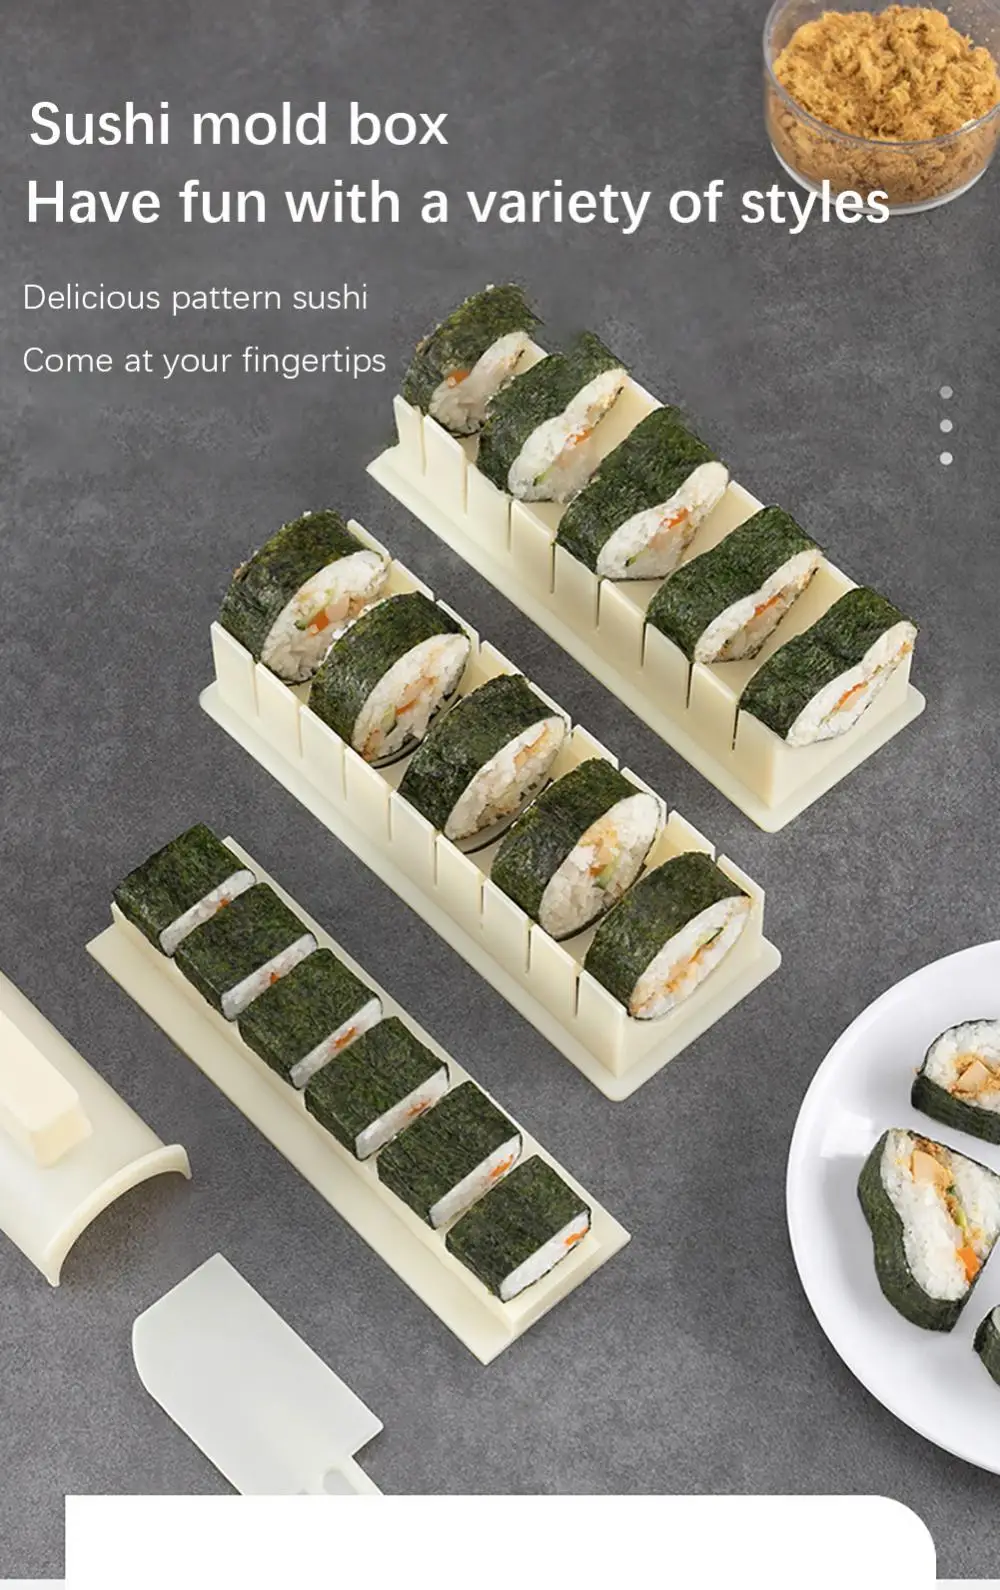 Sushi Rice Roll Mold 10 Pieces ABS Sushi Maker Tools Fun DIY Sushi